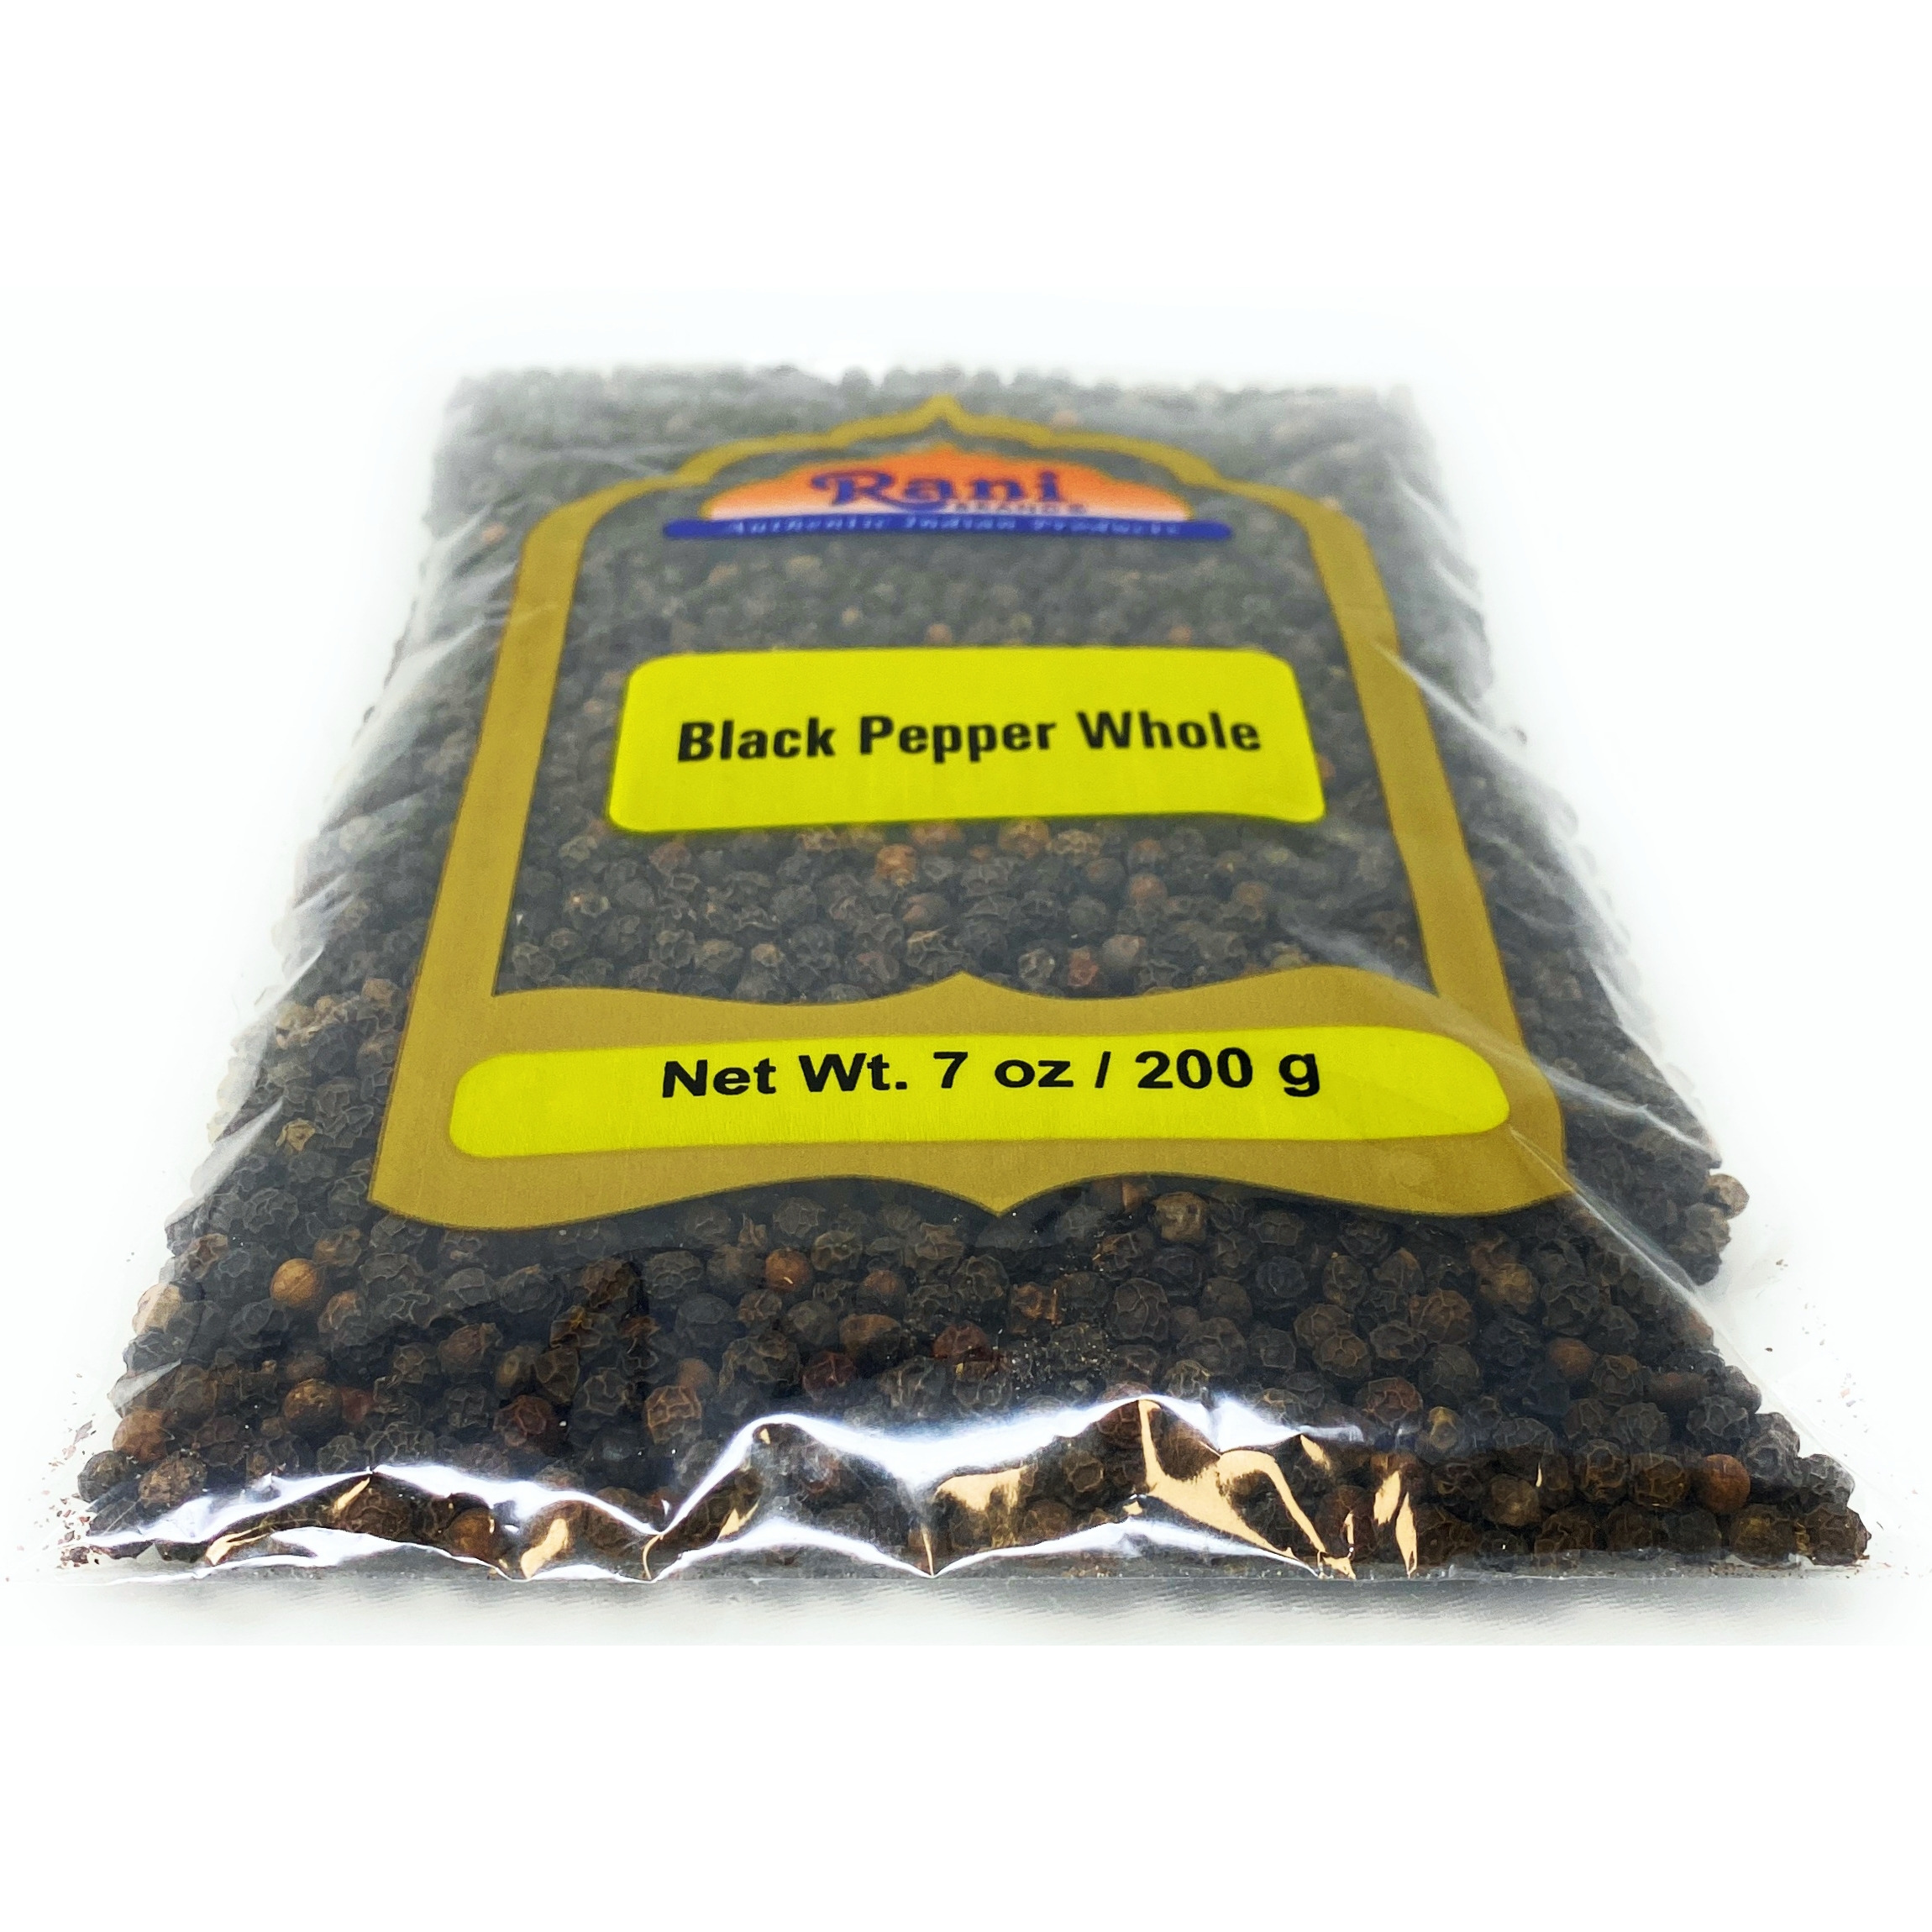 Rani Black Pepper Whole (Peppercorns), Premium Indian MG-1 Grade 7oz (200g) ~ Gluten Friendly, Non-GMO, Natural, Perfect size for Grinders!